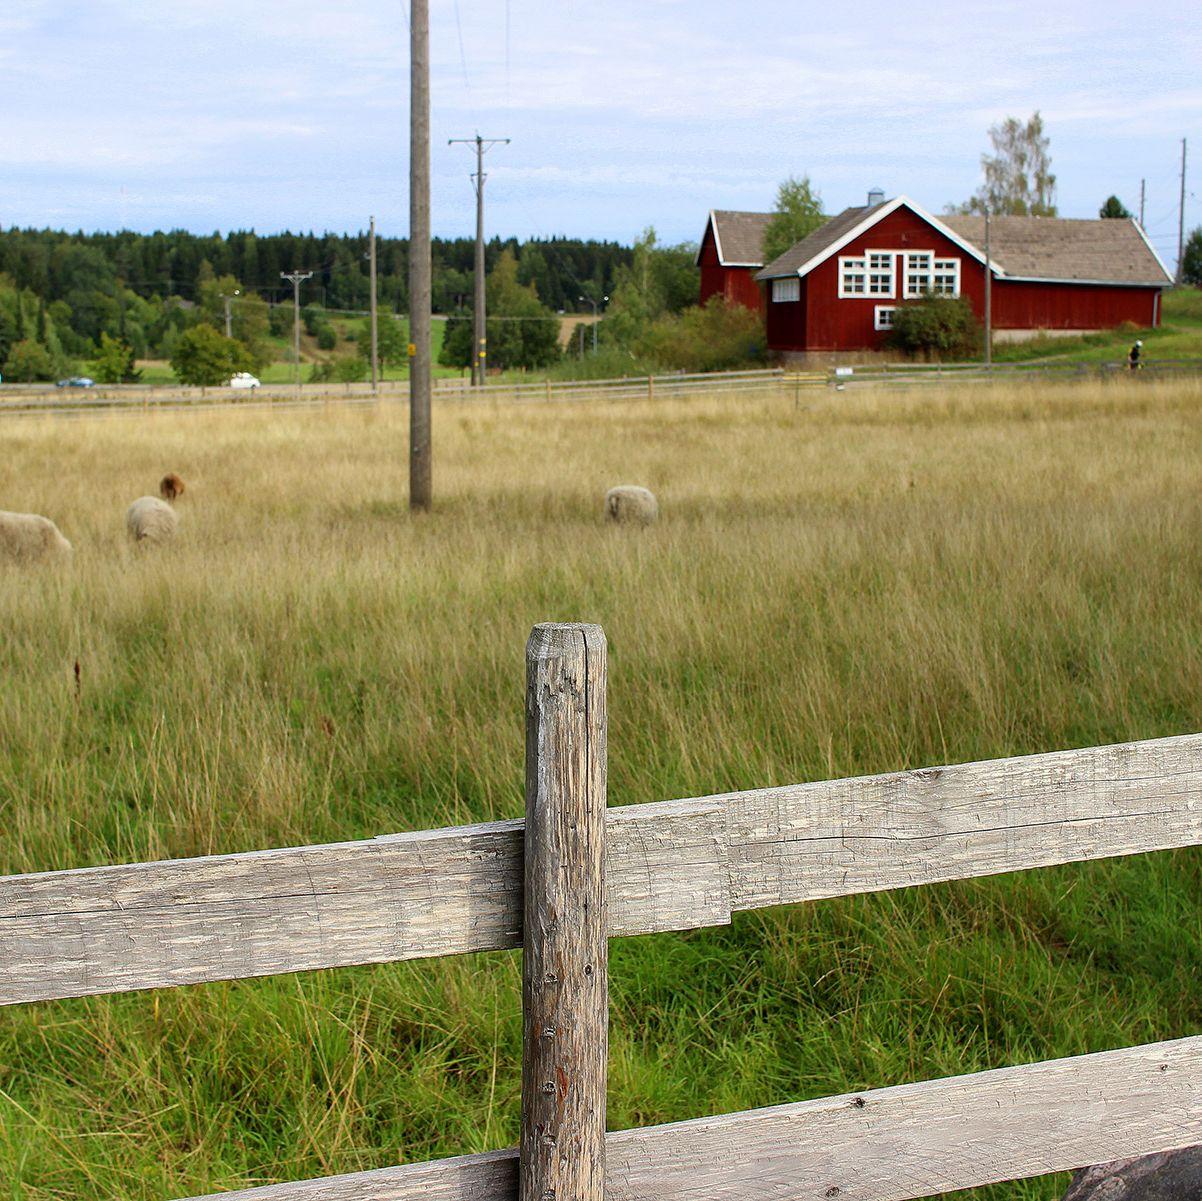 A field in front of a red wooden building at Kuralan Kylämäki.